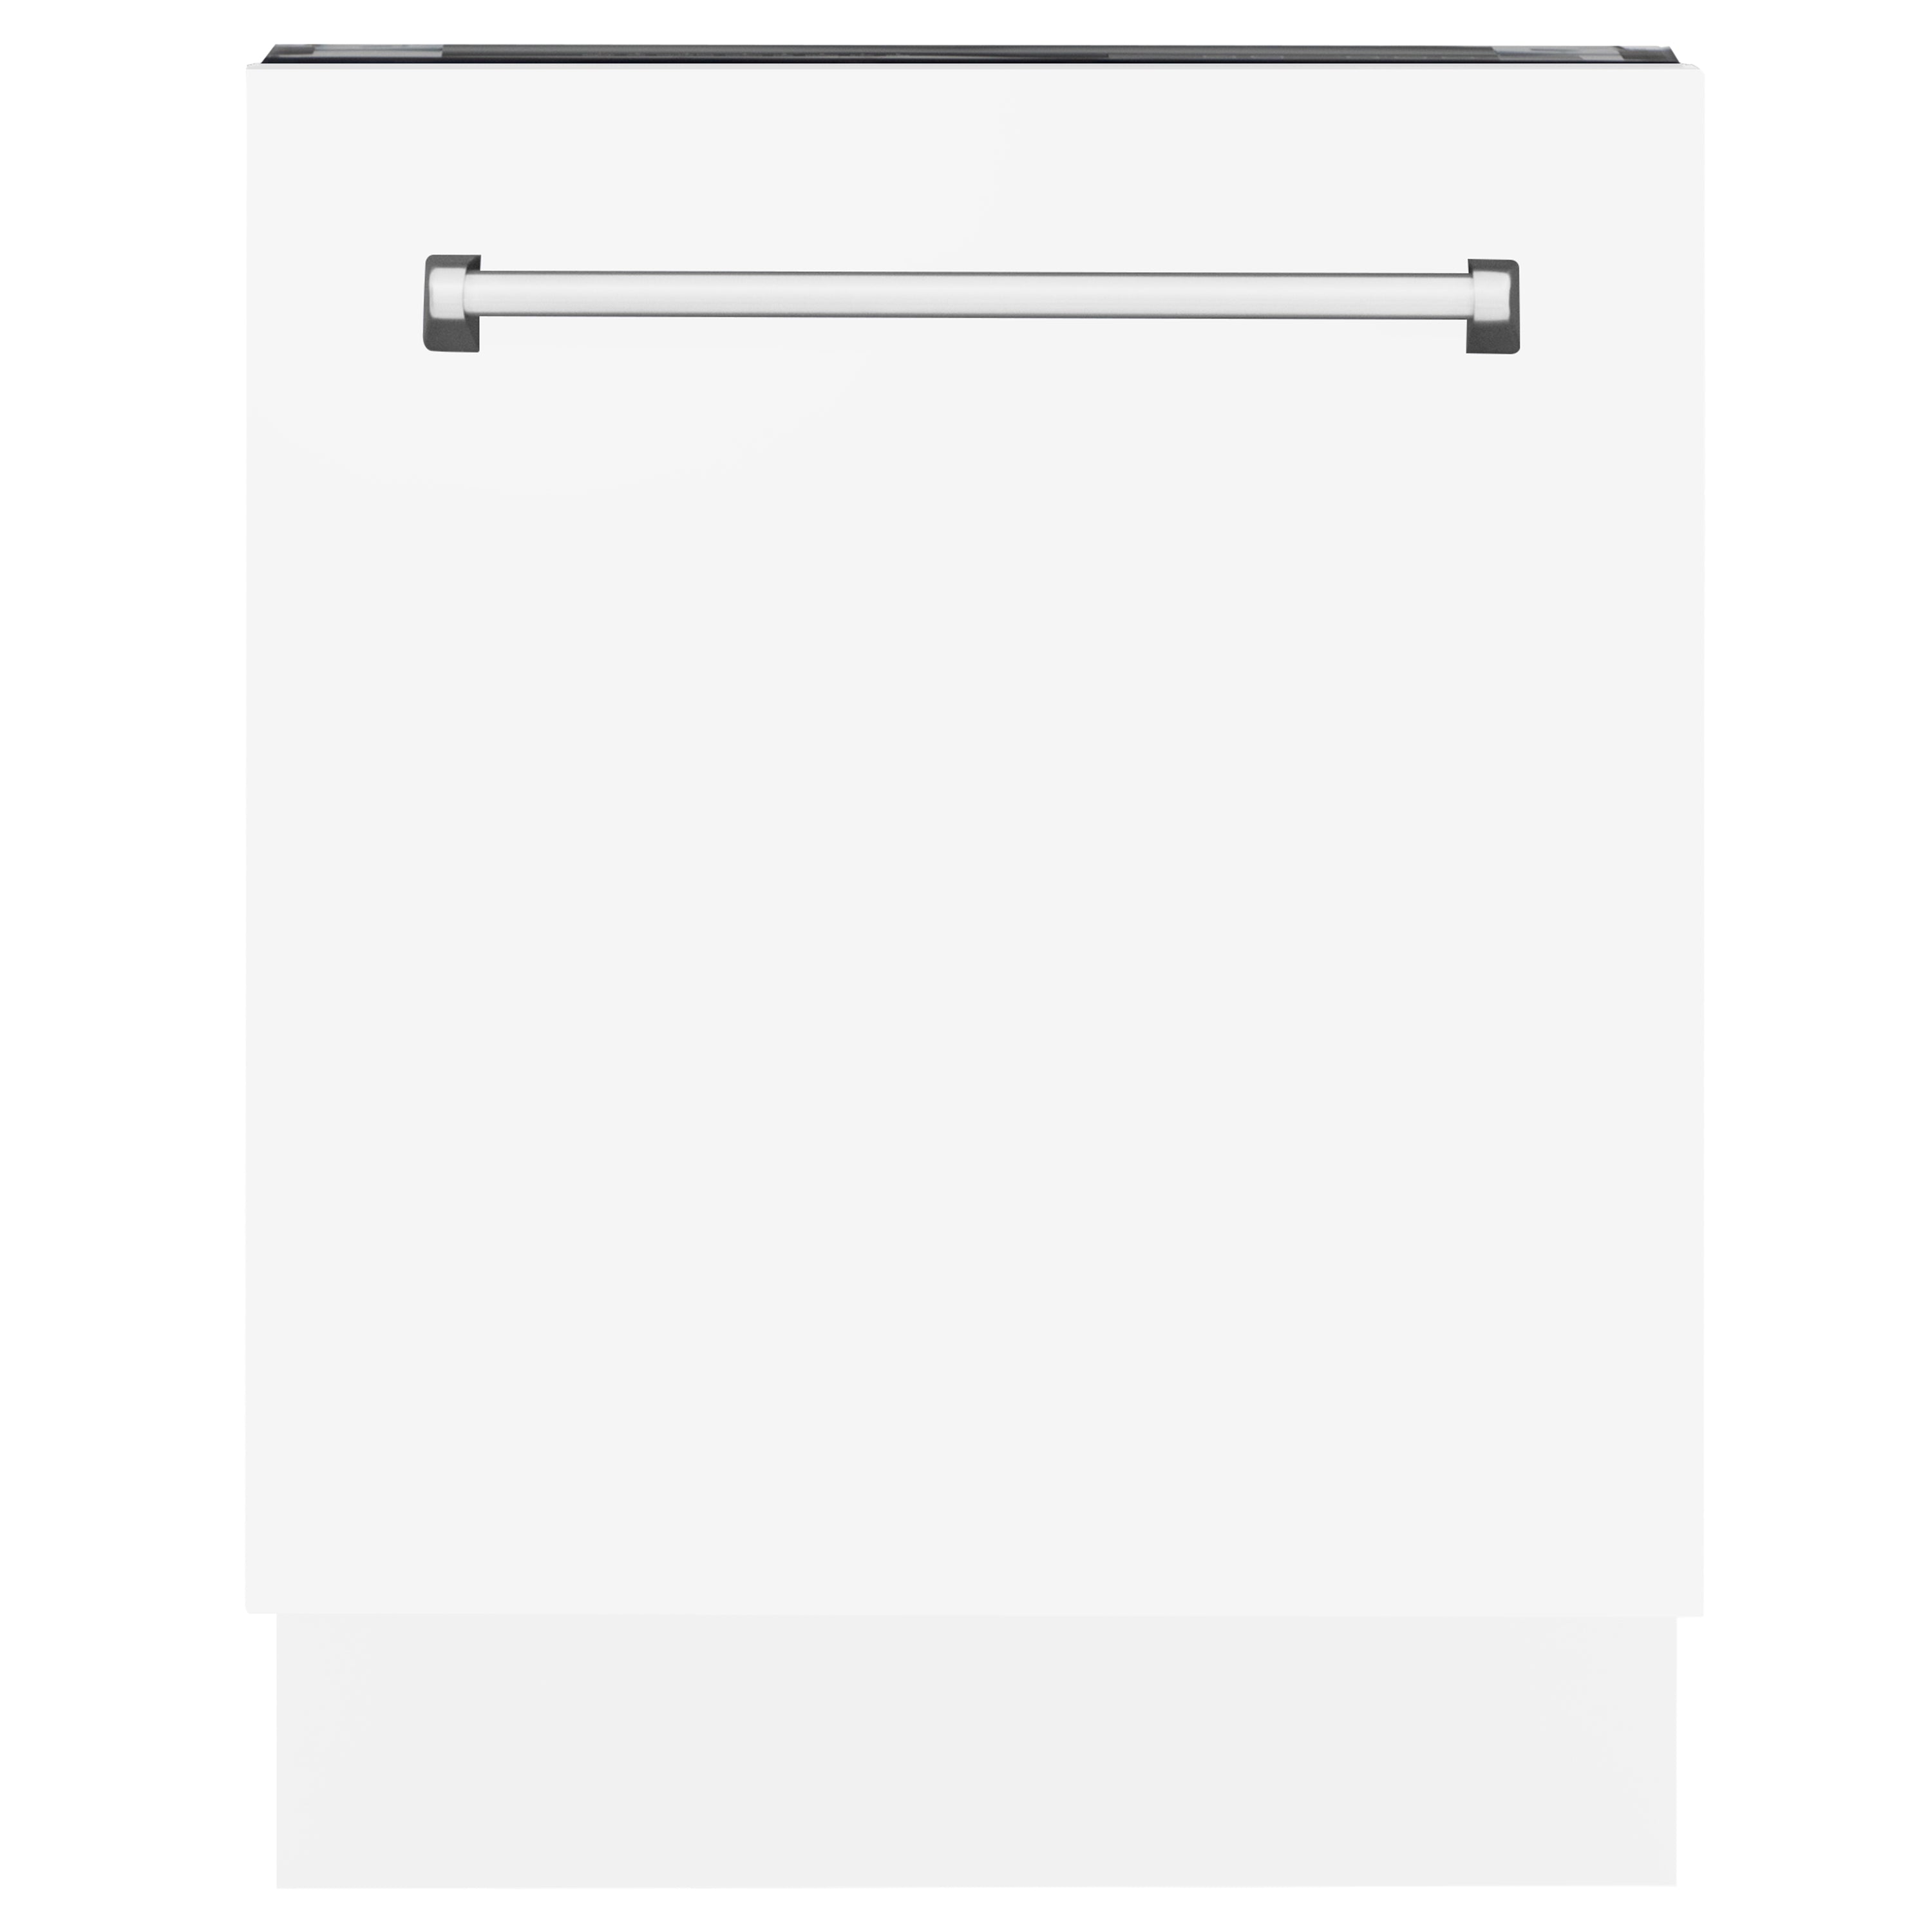 ZLINE 24" Tallac Series 3rd Rack Tall Tub Dishwasher in White Matte with Stainless Steel Tub, 51dBa (DWV-WM-24)